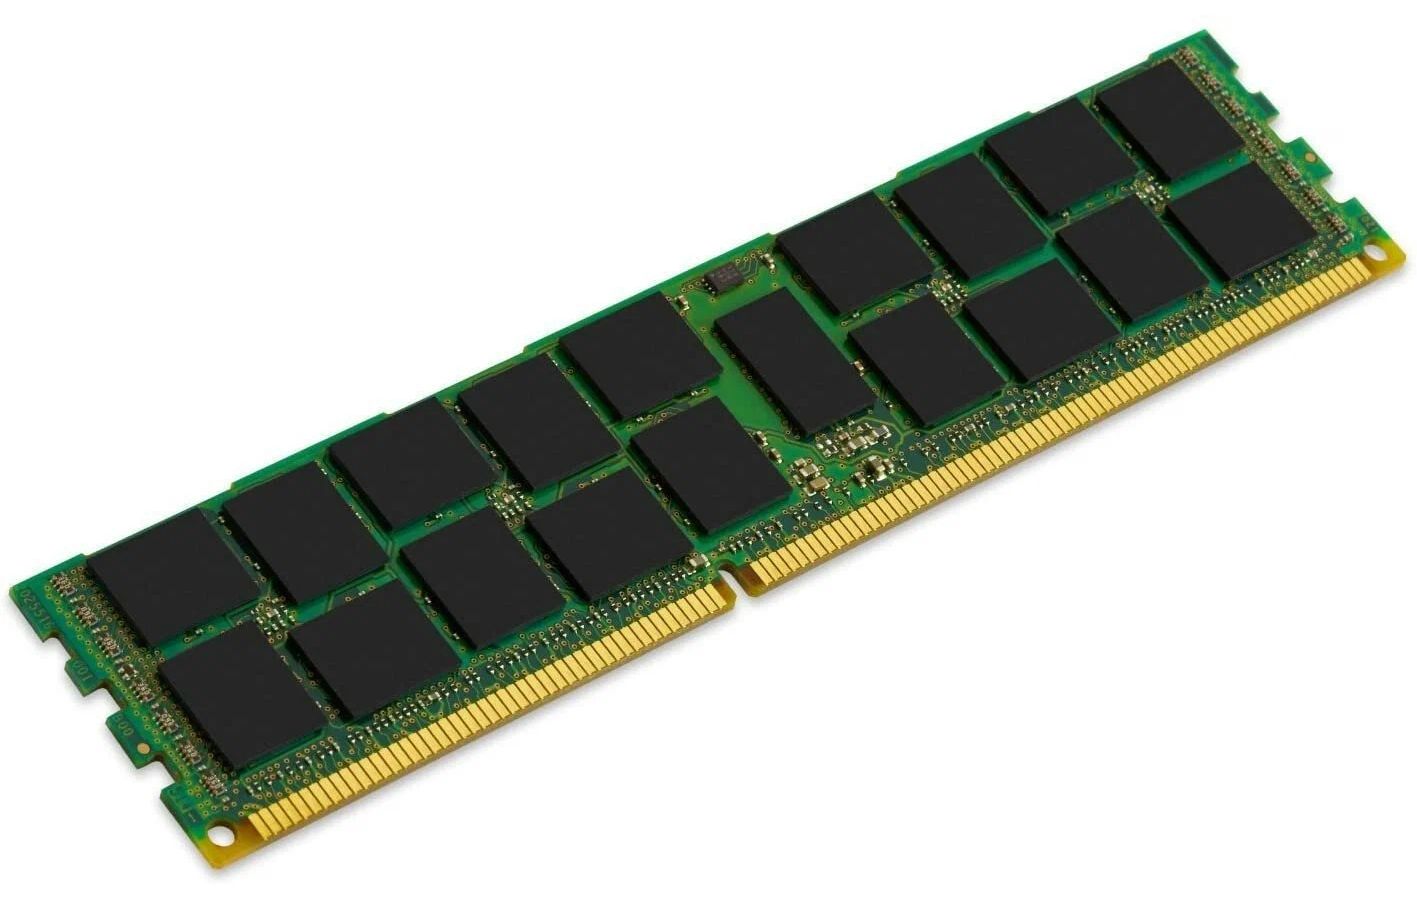 Оперативная память Kingston DDR3 DIMM 16GB 1600MHz (KVR16R11D4/16) серверная память ddr3 4 гб ecc reg 1333 1600 1866 мгц dimm озу с поддержкой материнской платы x79 lga 2011 14900 12800